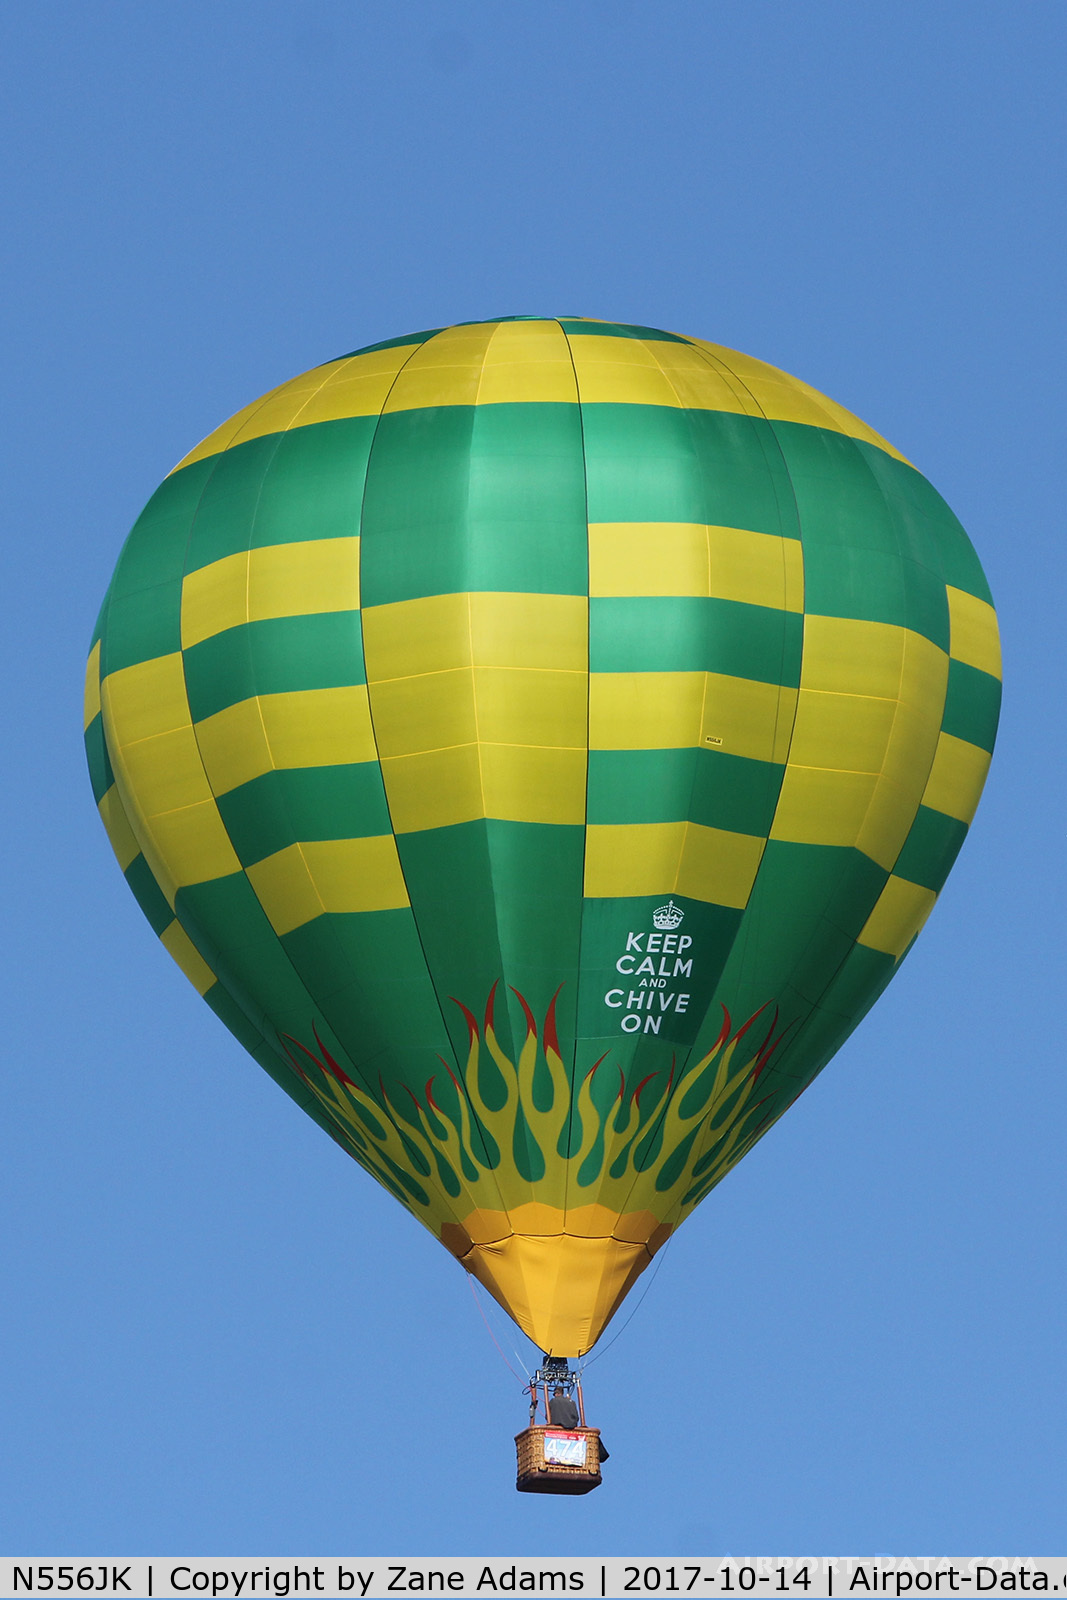 N556JK, 2014 John Kugler Kugler-2 C/N 002, At the 2017 Albuquerque Balloon Fiesta